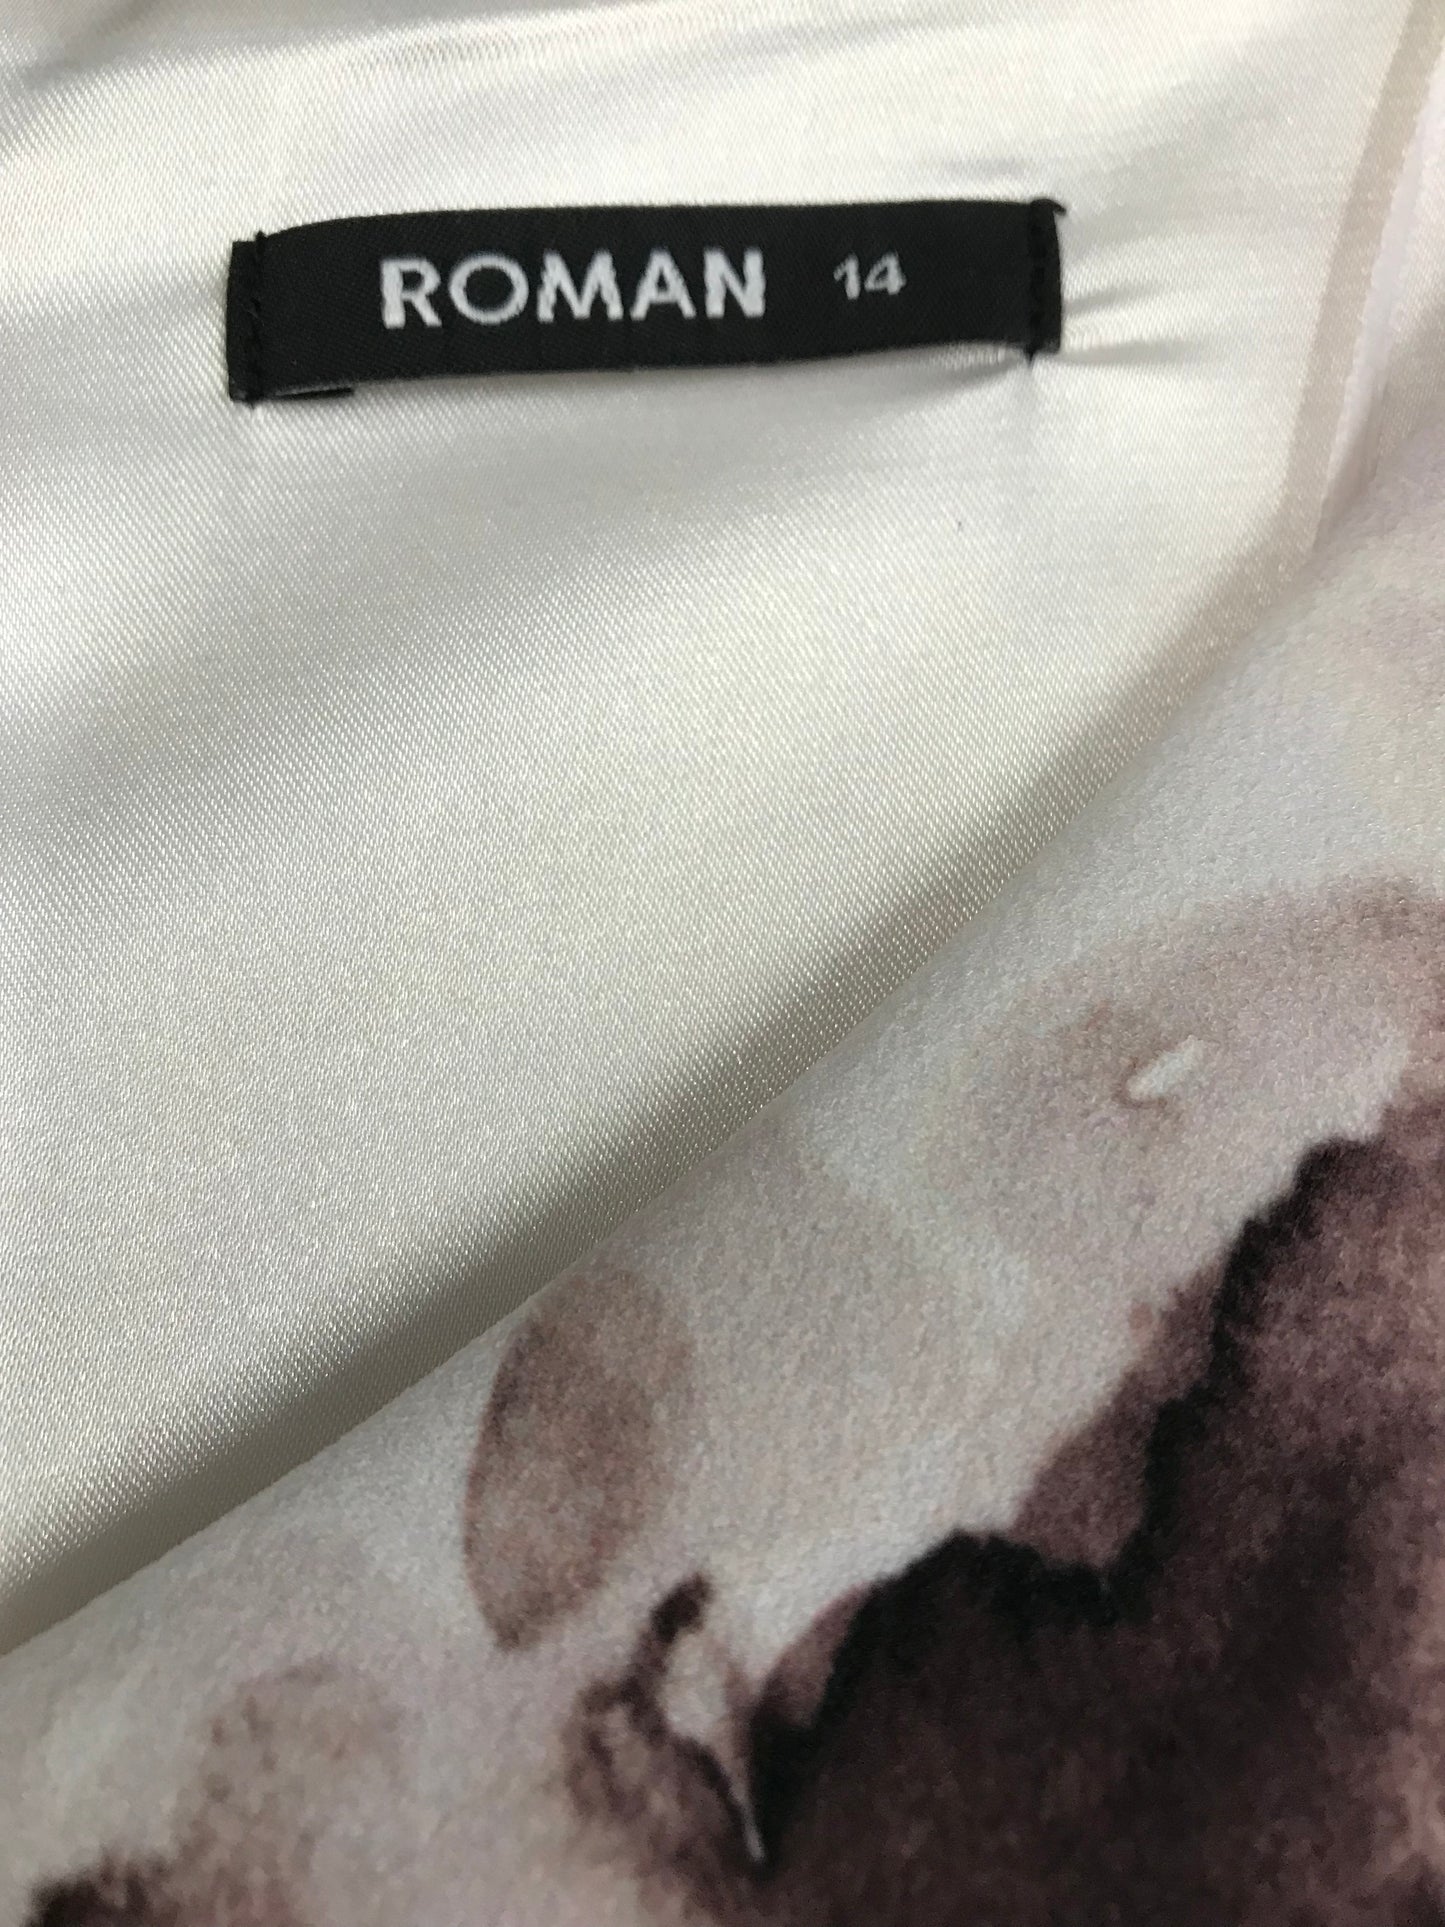 Roman Beige Floral Dress Size 14 BNWT